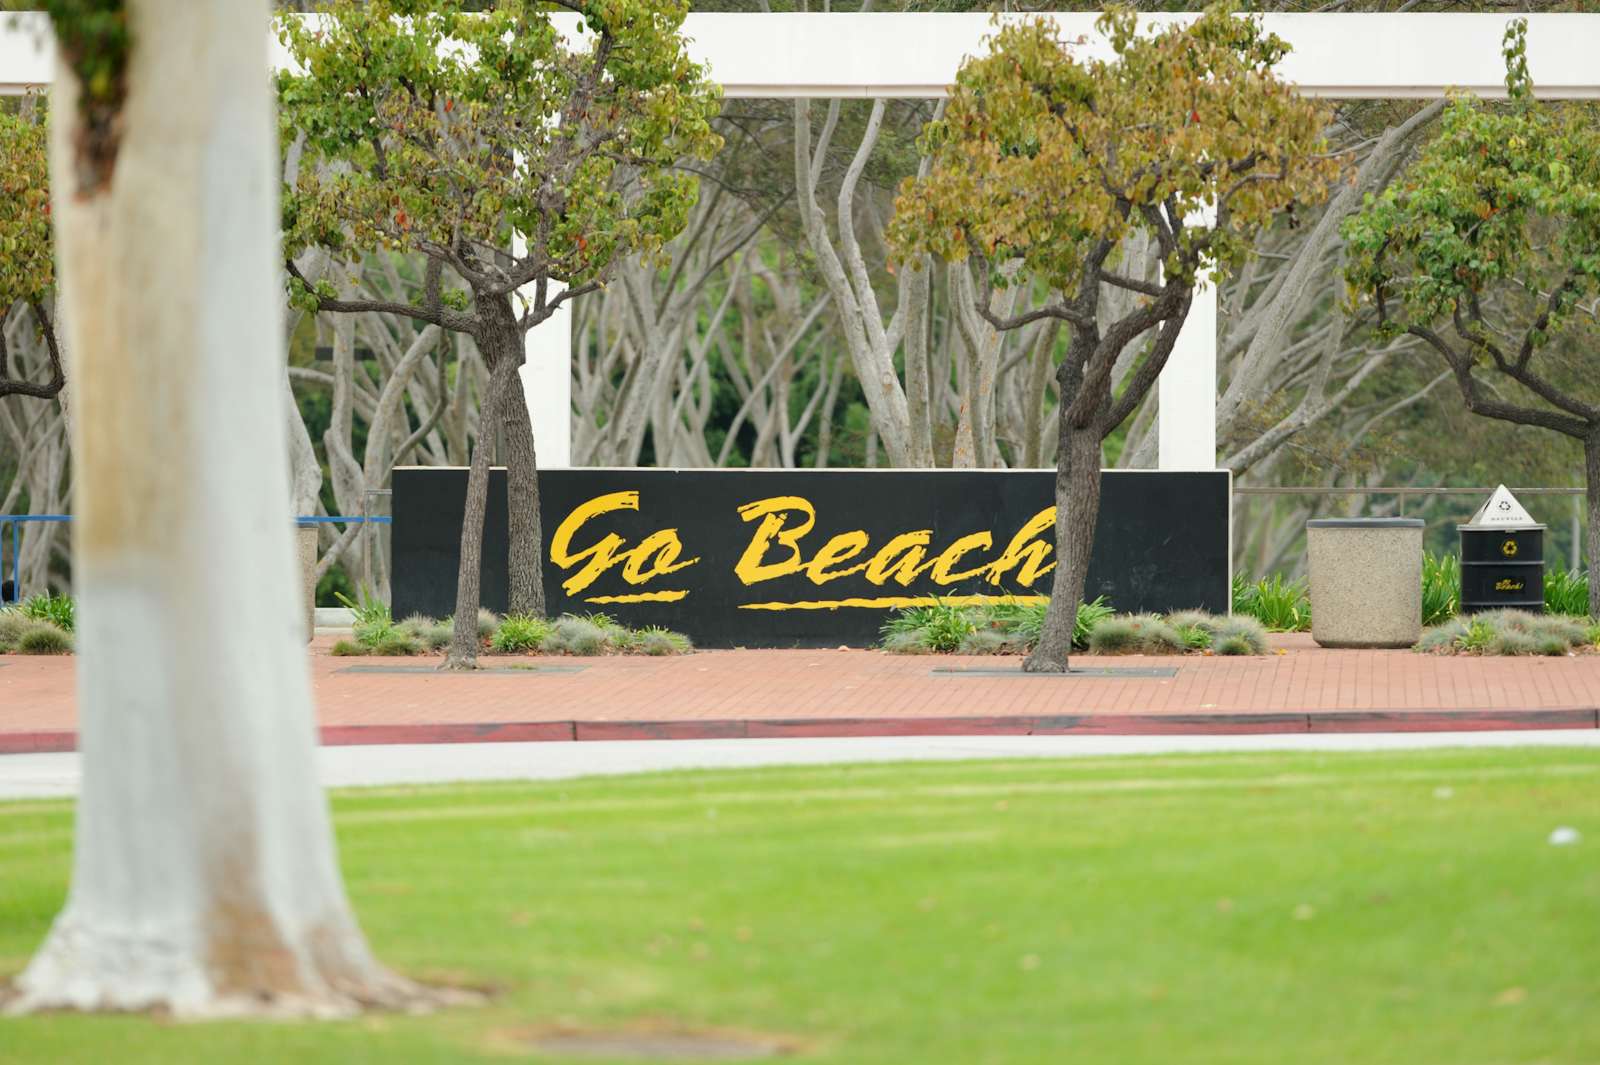 Go Beach sign at California State University Long Beach